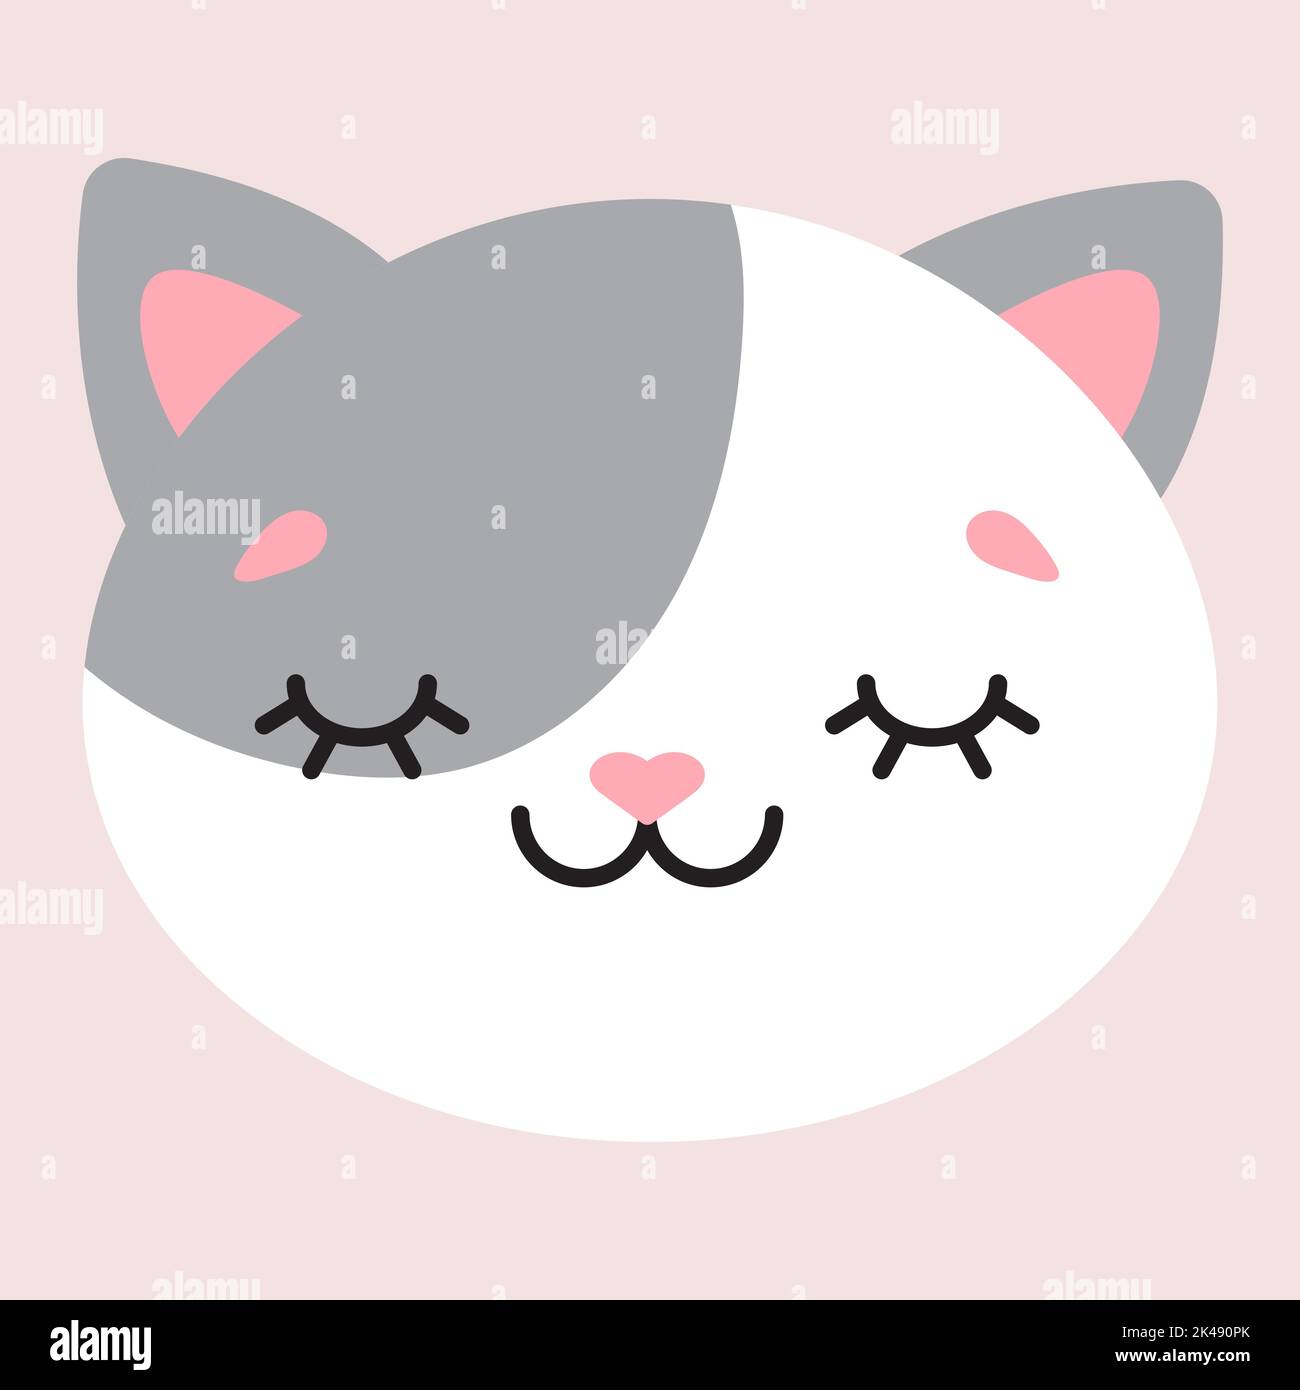 Niedliche einfache flache Illustration eines Katzenkopfes. Vektorgrafik. Stock Vektor